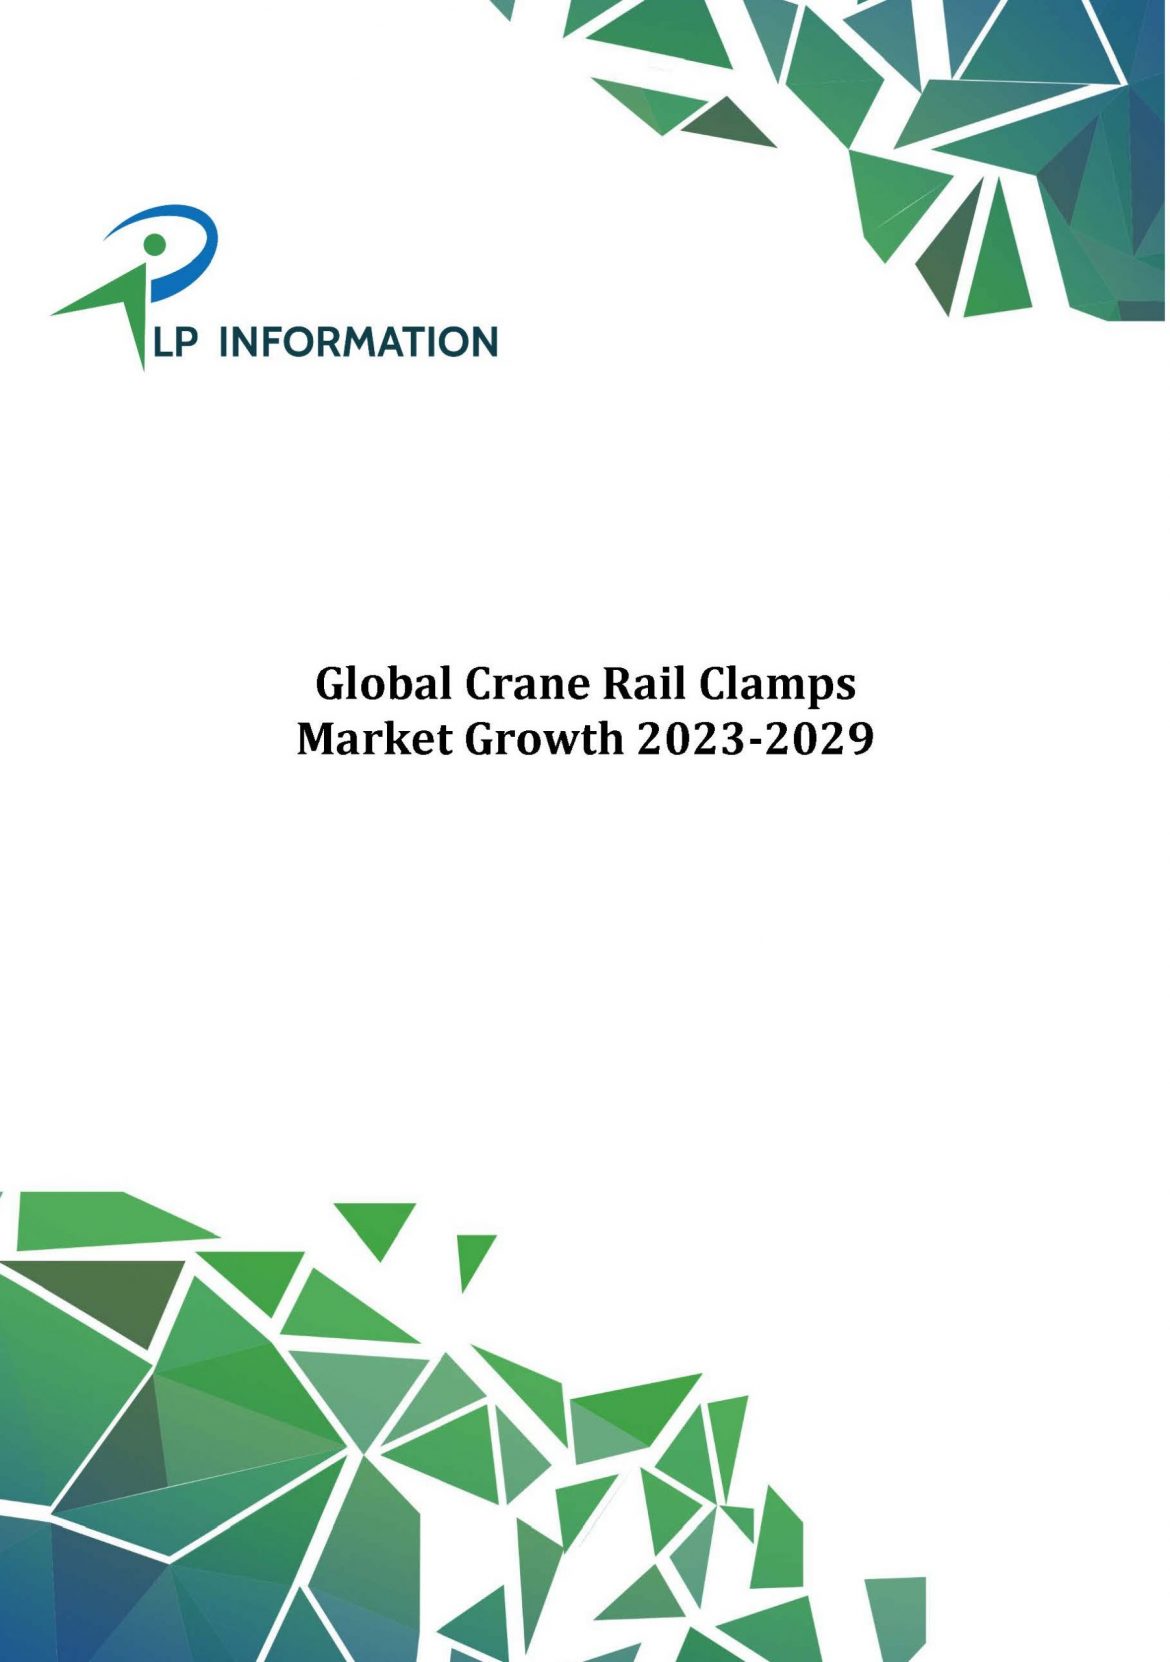 Global Crane Rail Clamps Market Growth 2023-2029